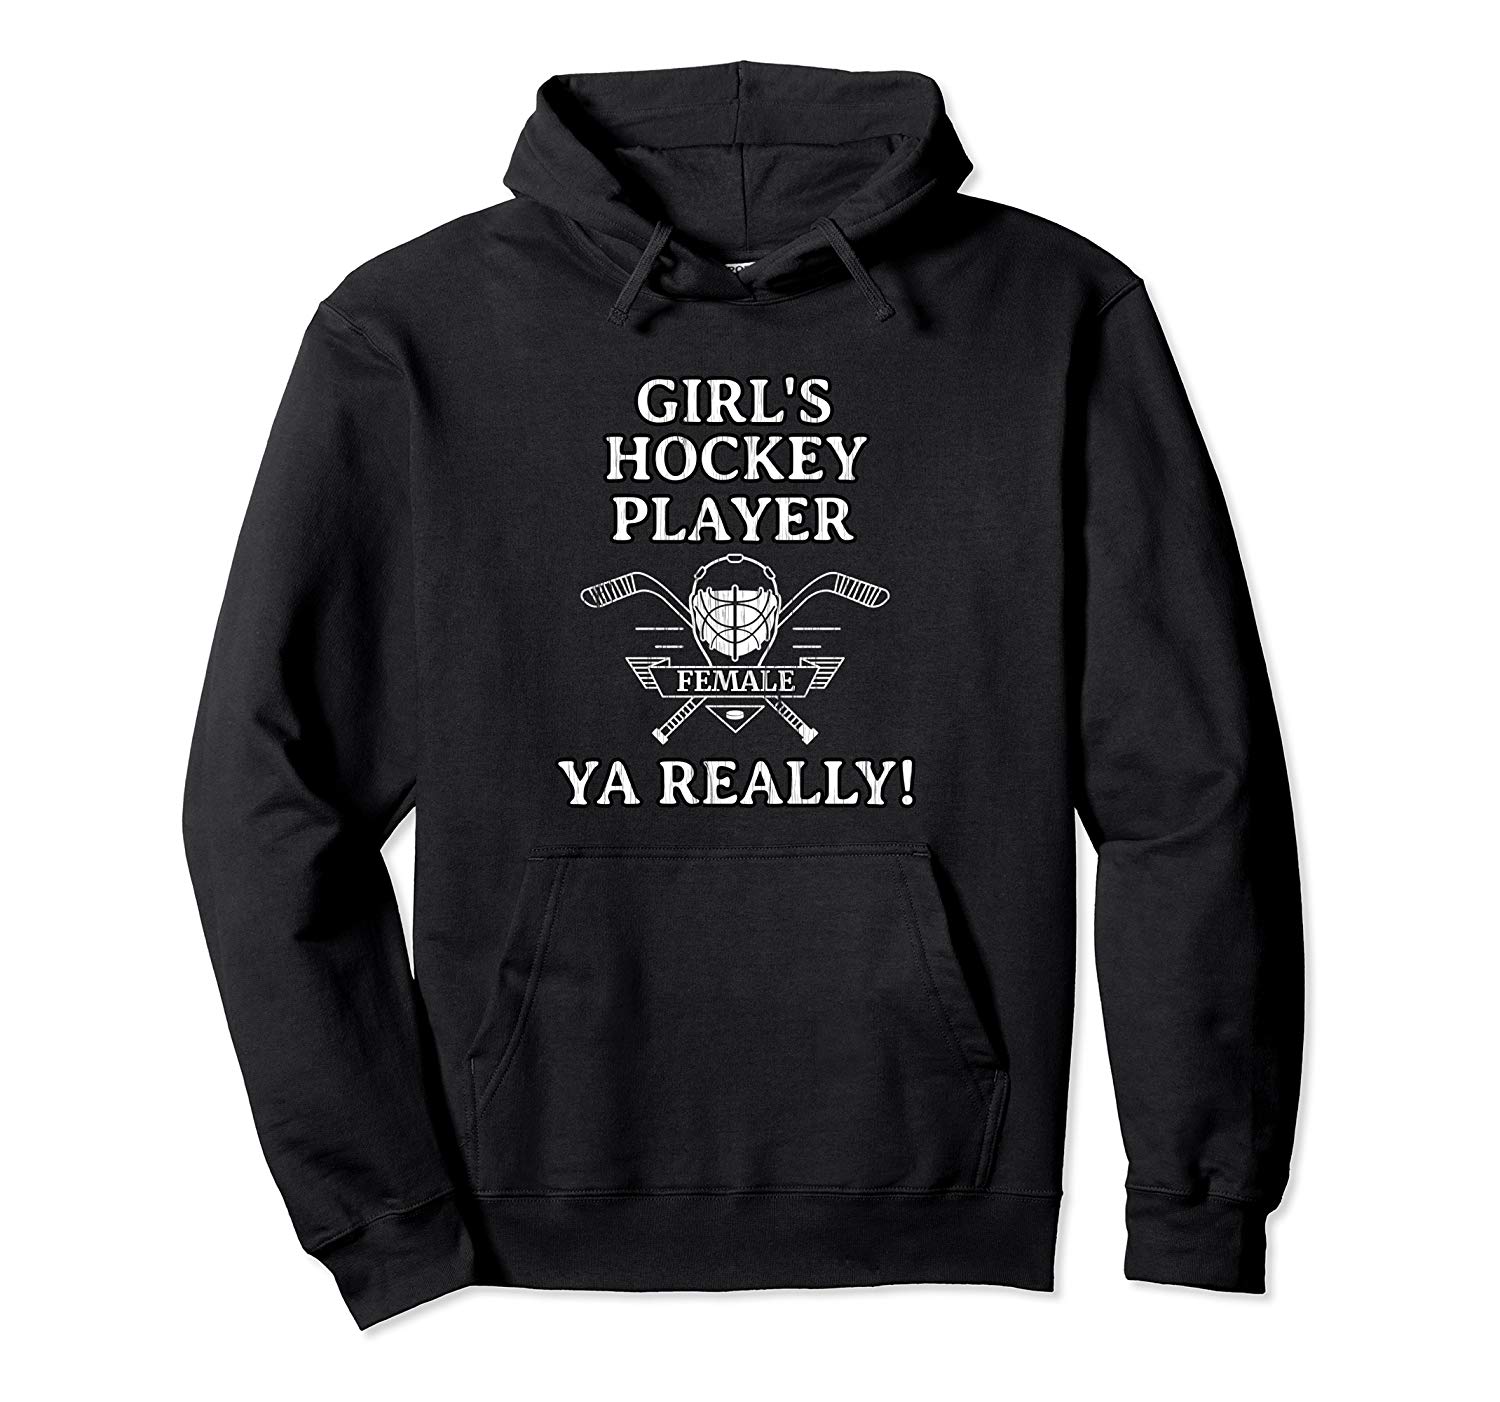 GIRLS HOCKEY PLAYER – YA REALLY! Funny Ice Hockey hoodie